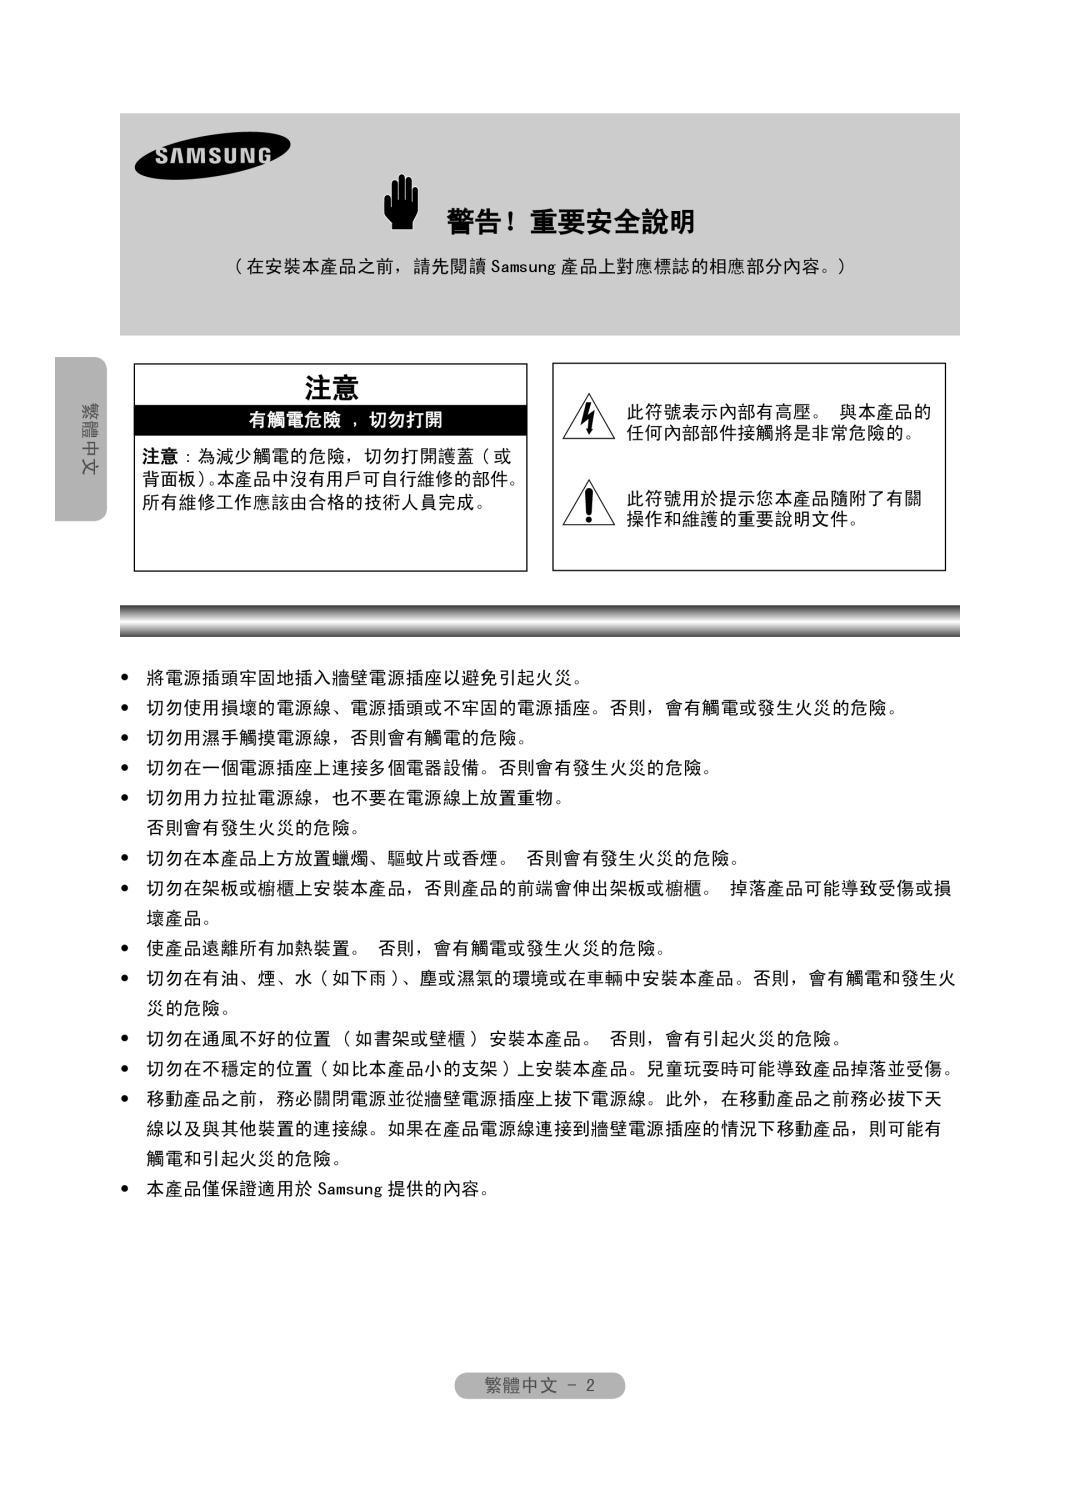 Samsung MR-16SB2 manual 警告！重要安全說明, 繁體中文, 有觸電危險 ﹐ 切勿打開 